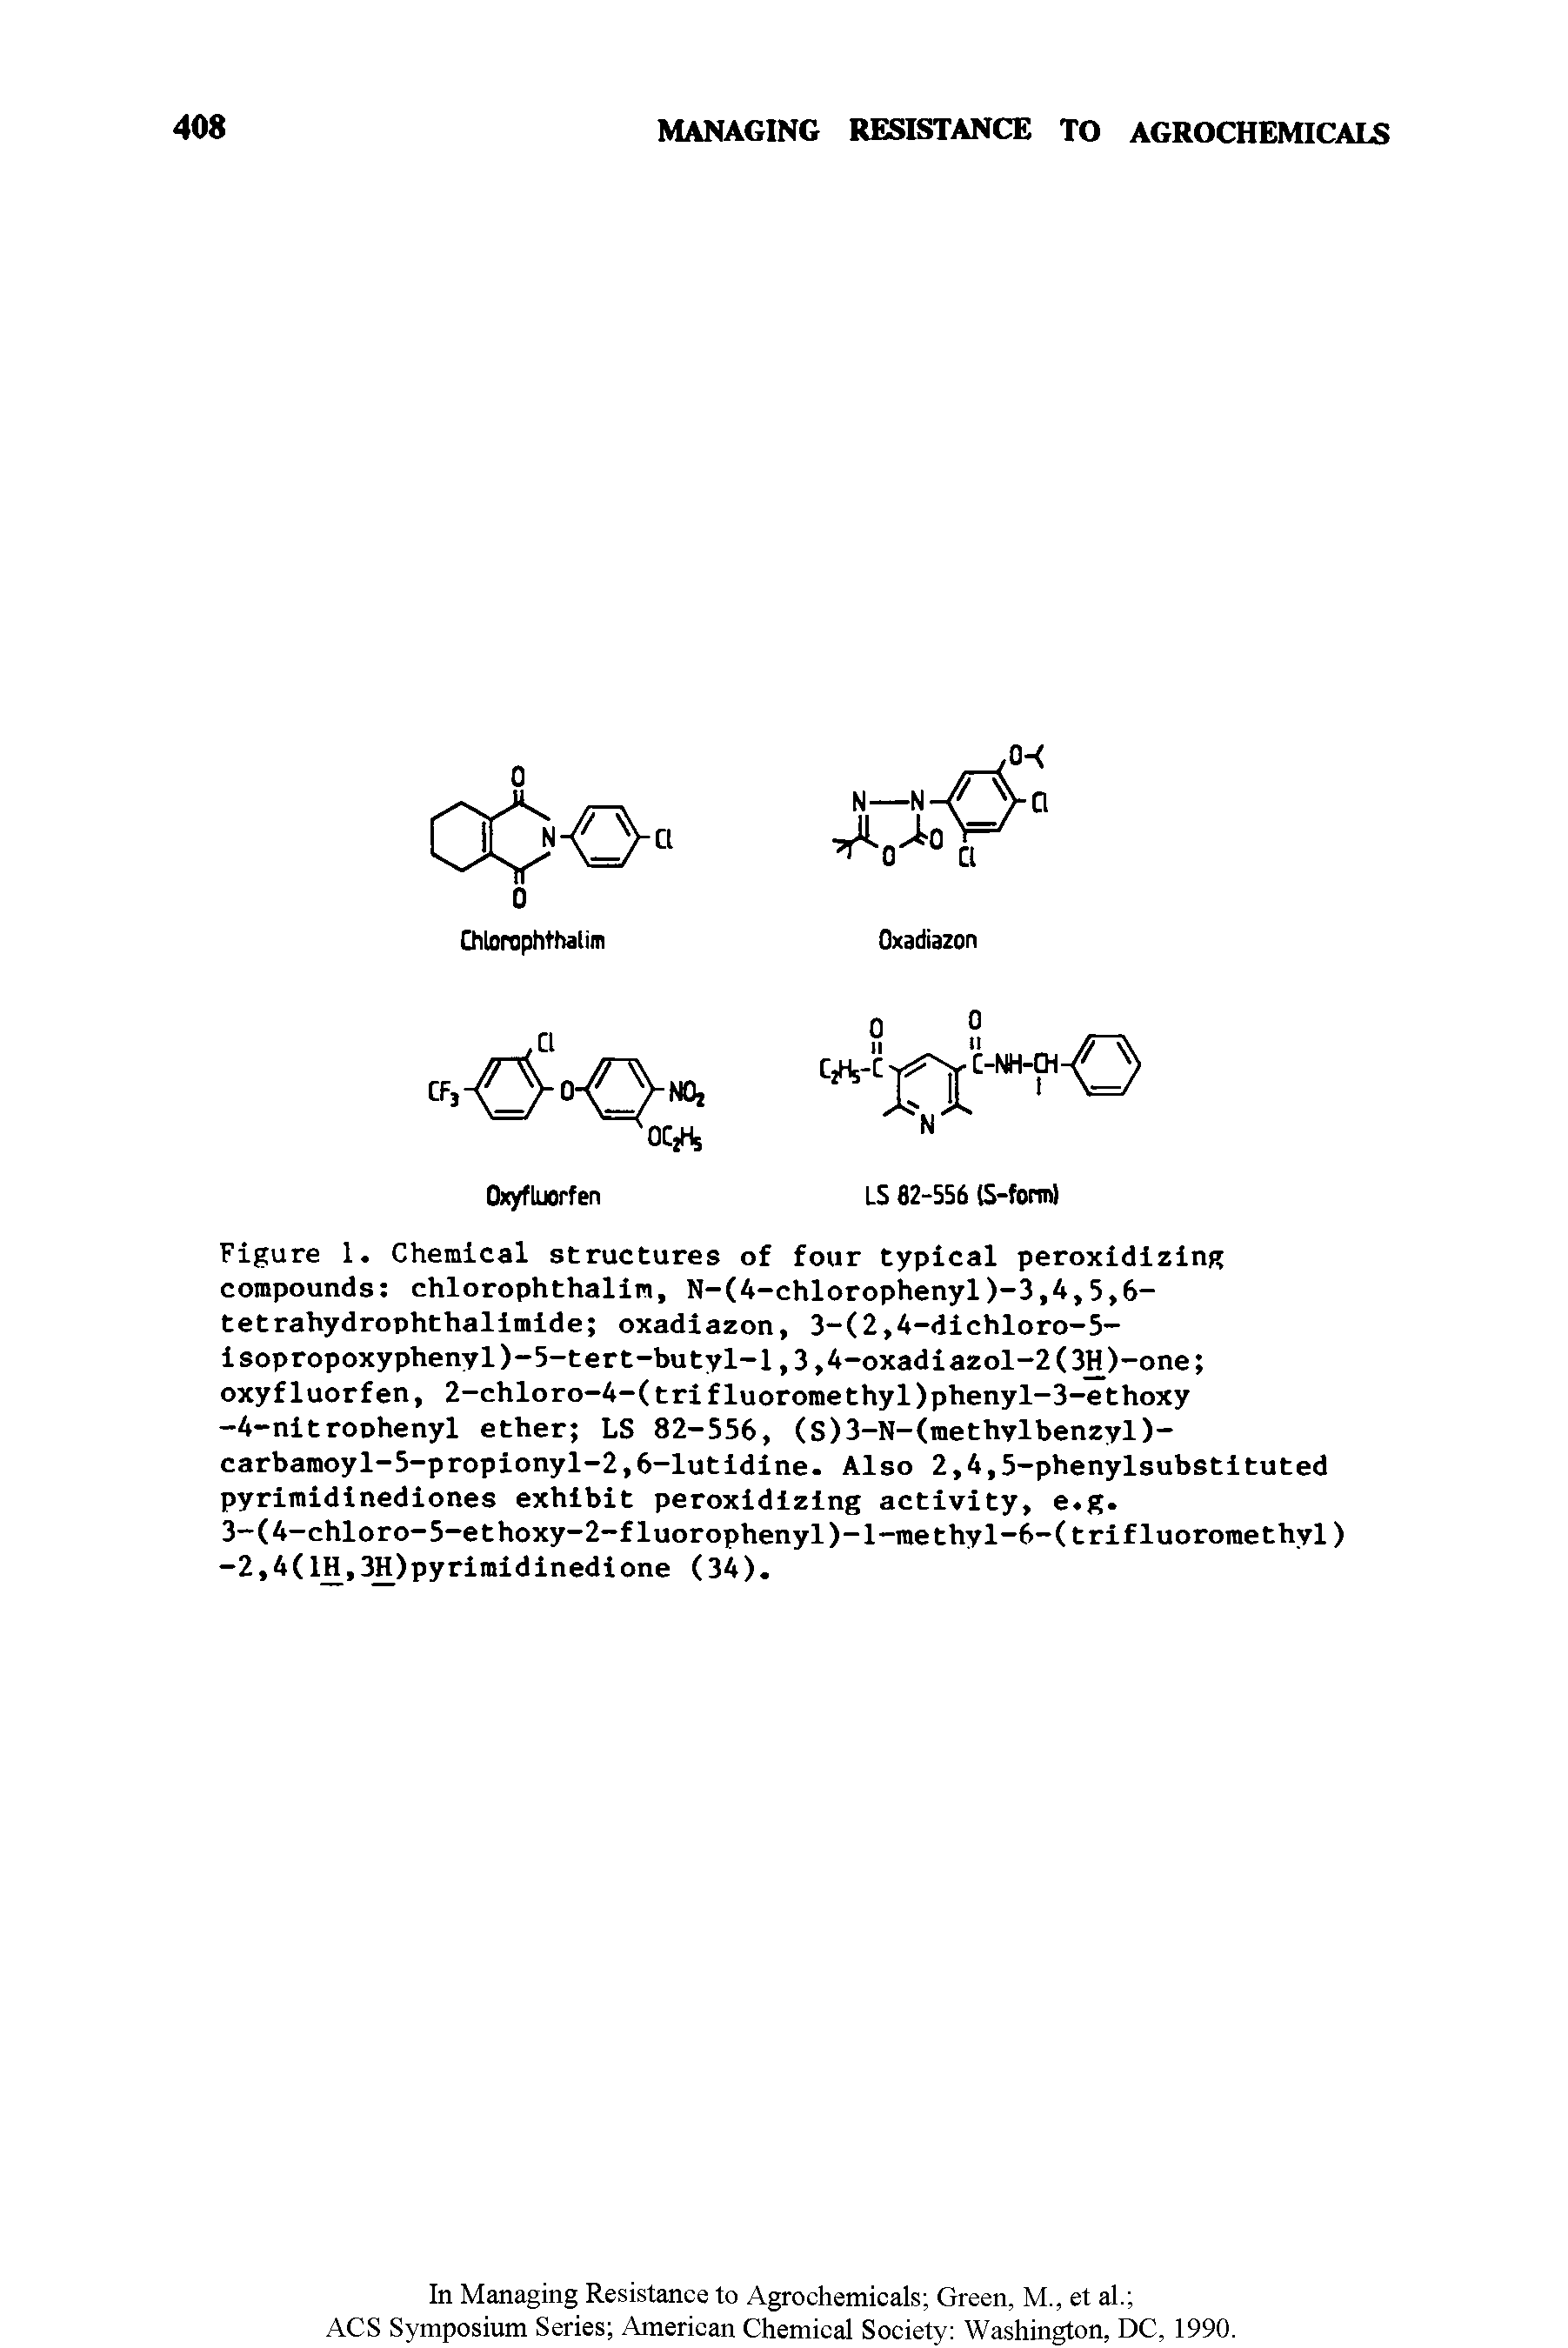 Figure 1. Chemical structures of four typical peroxidizing compounds chlorophthalim, N-(4-chlorophenyl)-3,4,5,6-tetrahydrophthalimide oxadiazon, 3-(2,4-dichloro-5-isopropoxyphenyl)-5-tert-butyl-l,3,4-oxadiazol-2(3H)-one oxyfluorfen, 2-chloro-4-(trifluoromethyl)pheny1-3-ethoxy -4-nitroDhenyl ether LS 82-556, (S)3-N-(methylbenzyl)-carbamoyl-5-propionyl-2,6-lutidine. Also 2,4,5-phenylsubstituted pyrimidinediones exhibit peroxidizing activity, e.g. 3-(4-chloro-5-ethoxy-2-fluorophenyl)-l-methyl-6-(trifluoromethyl) -2,4(lll,3H)pyrimidinedione (34).